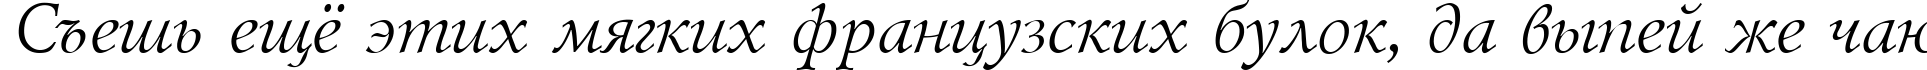 Пример написания шрифтом Lazursky Italic:001.001 текста на русском